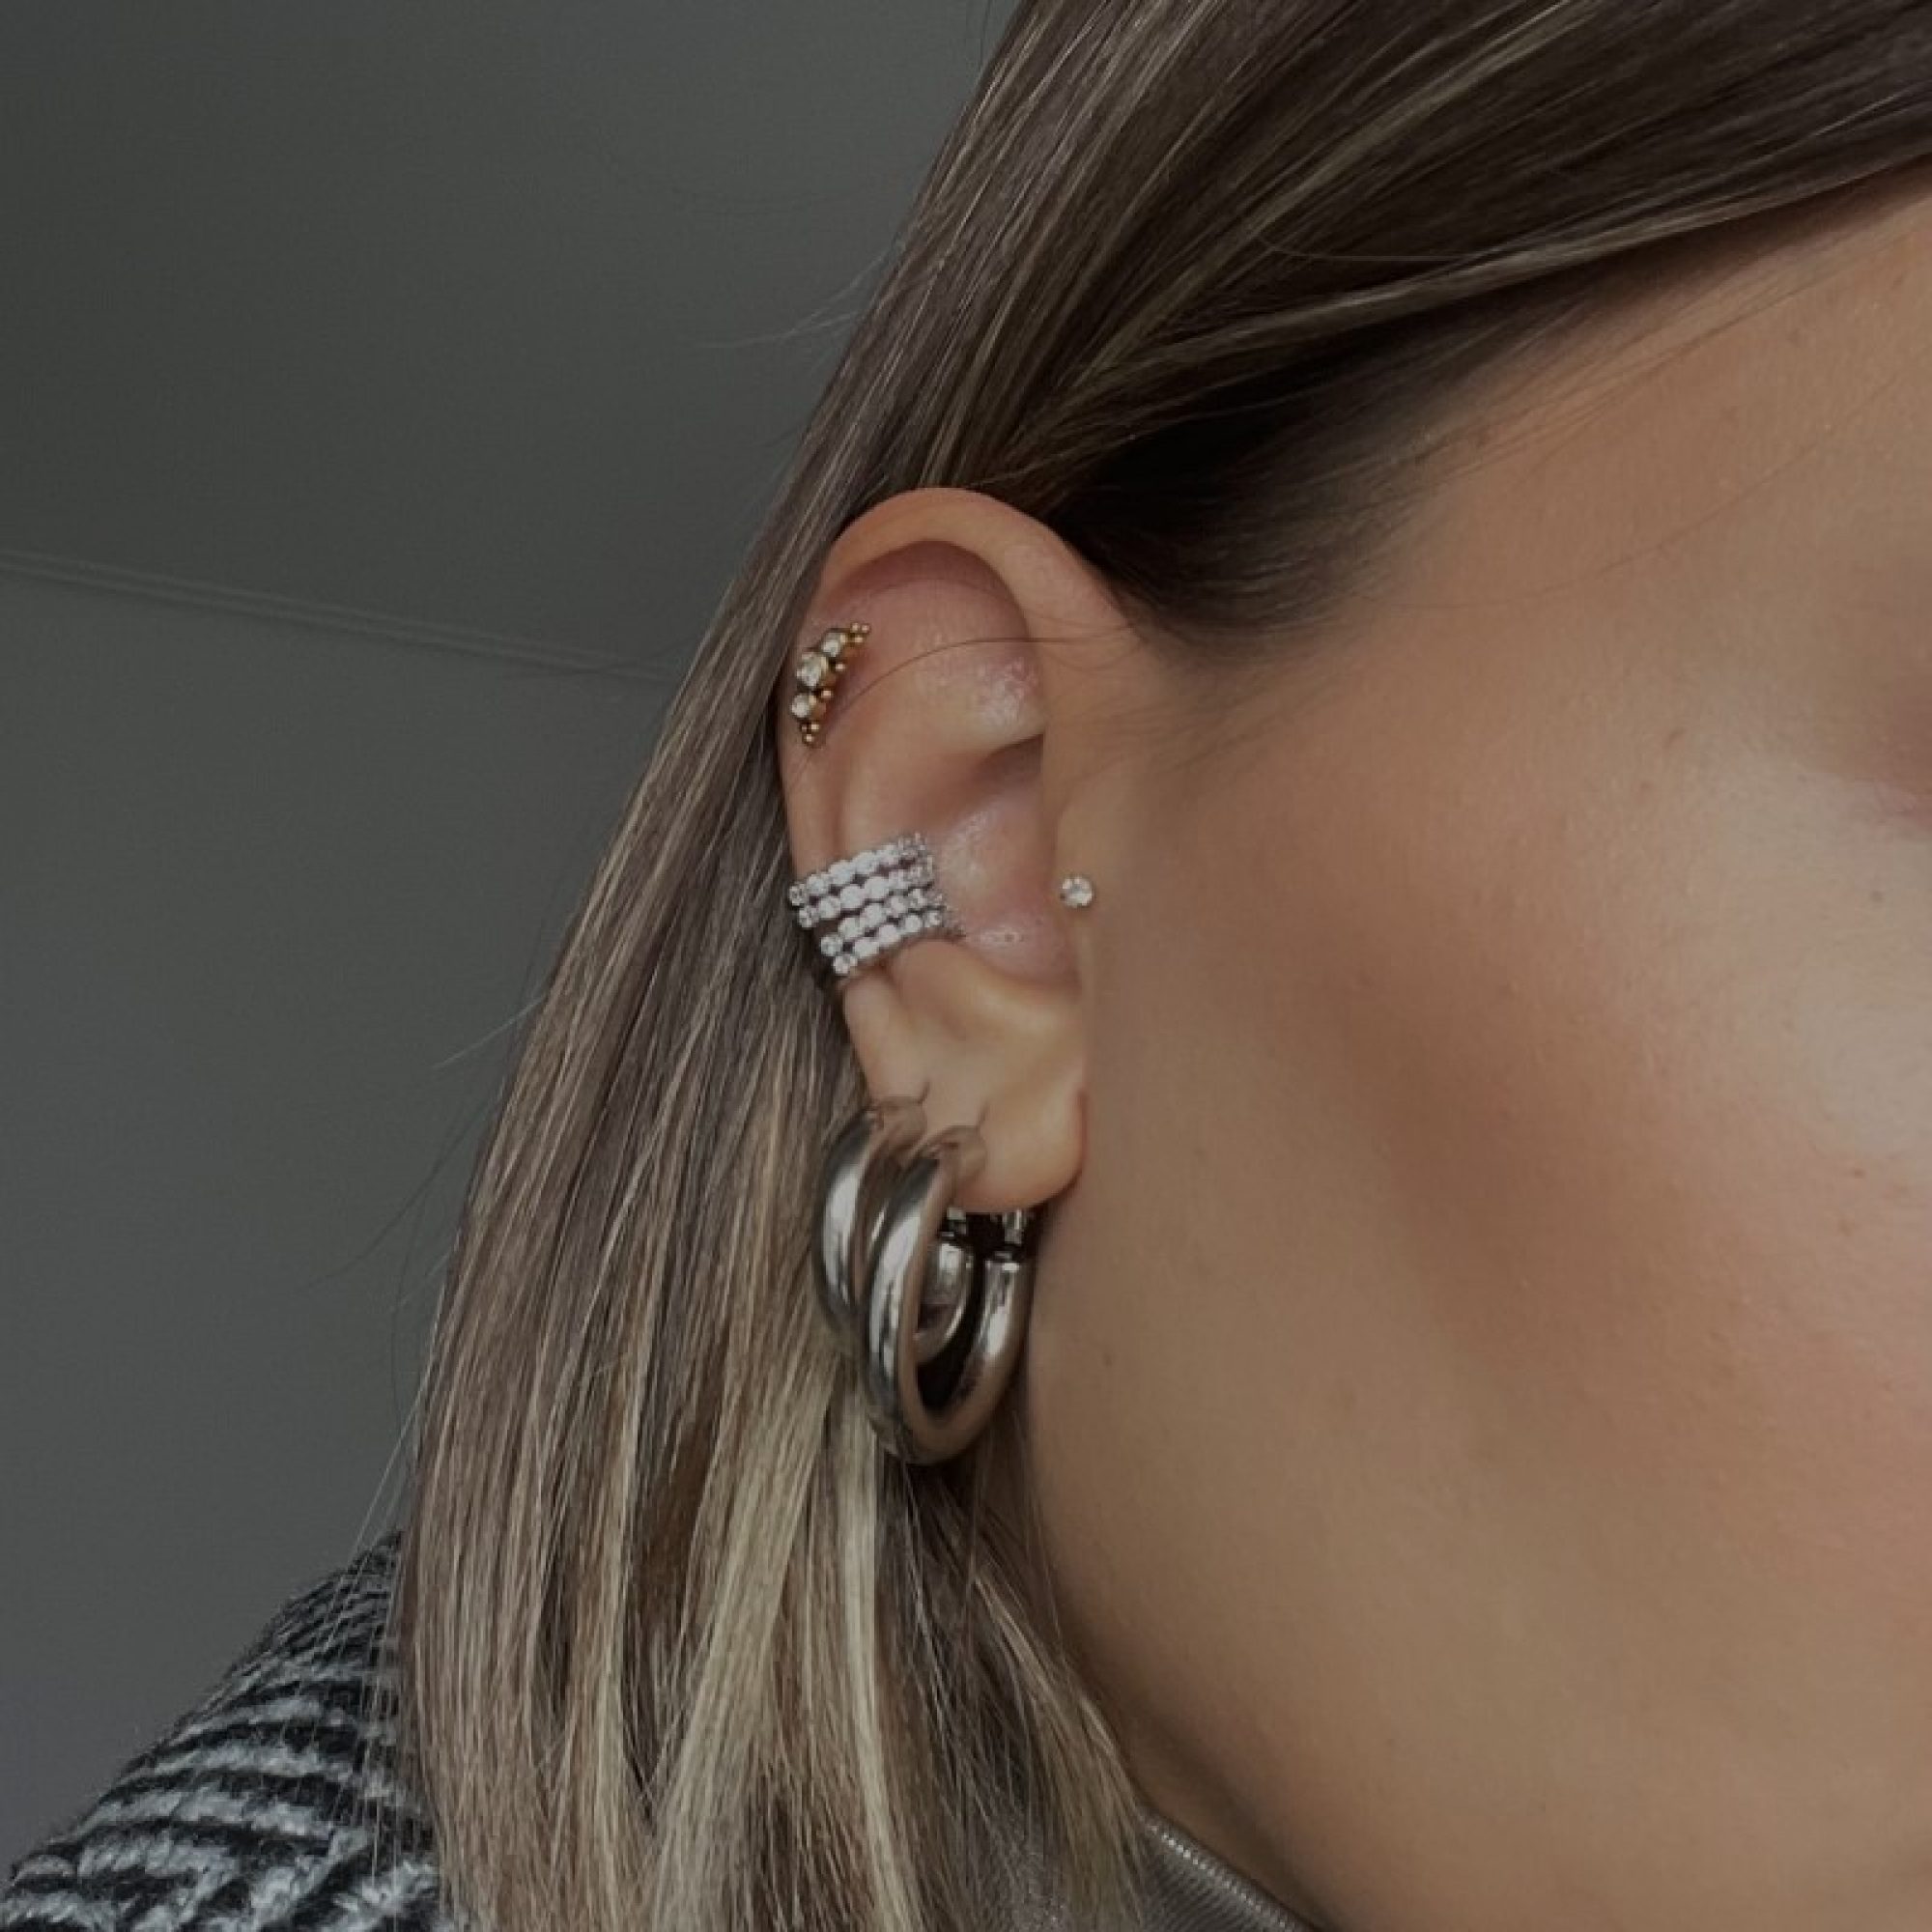 Silver ear cuffs with zircon stones